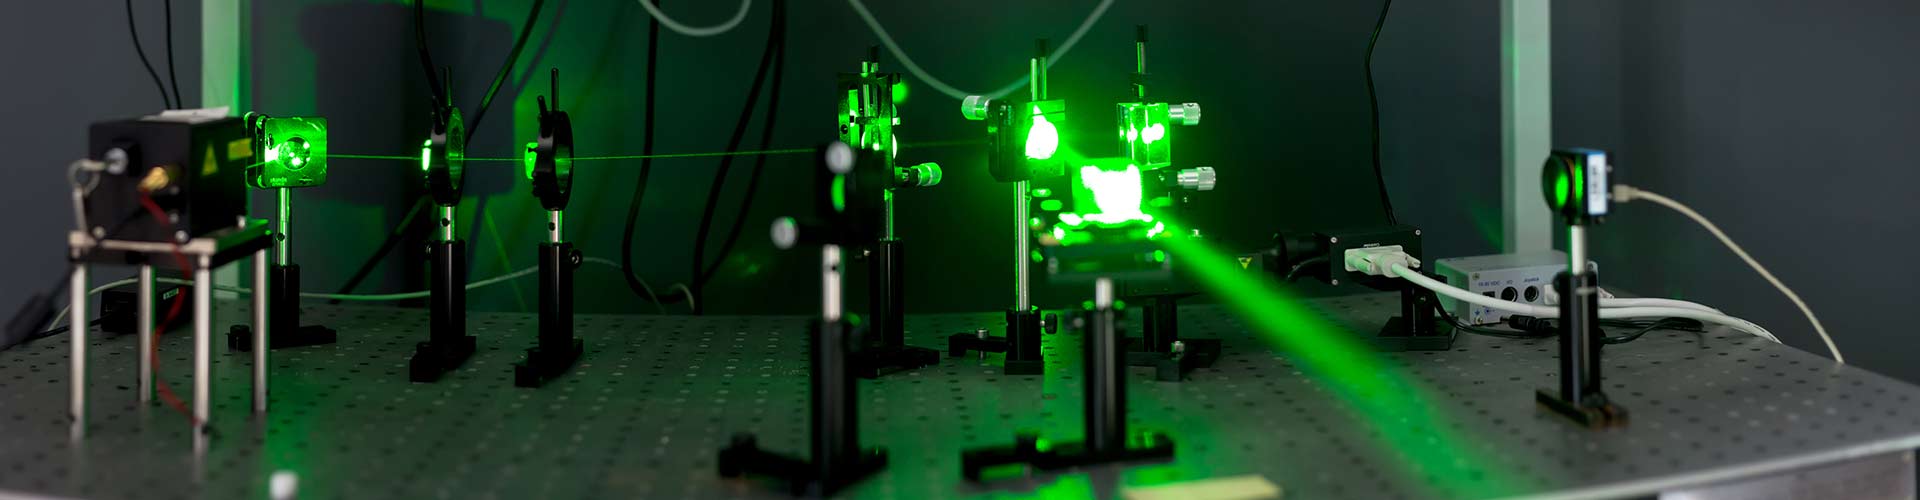 Green laser through glass experiment.